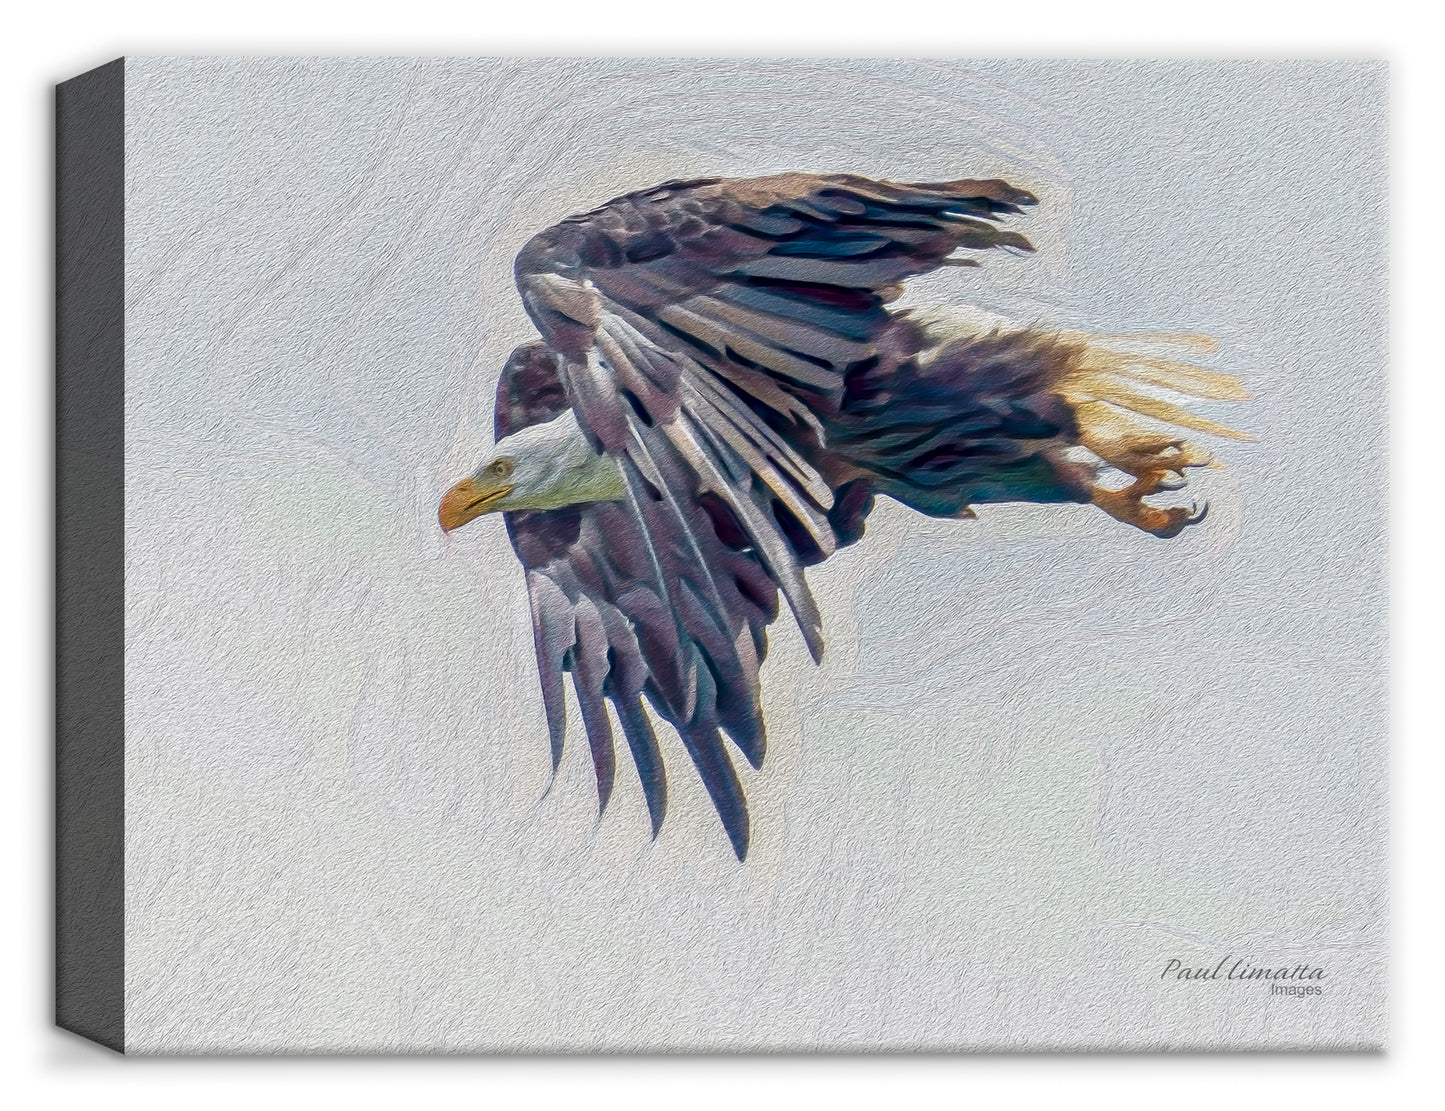 American Bald Eagle - by Paul Limatta